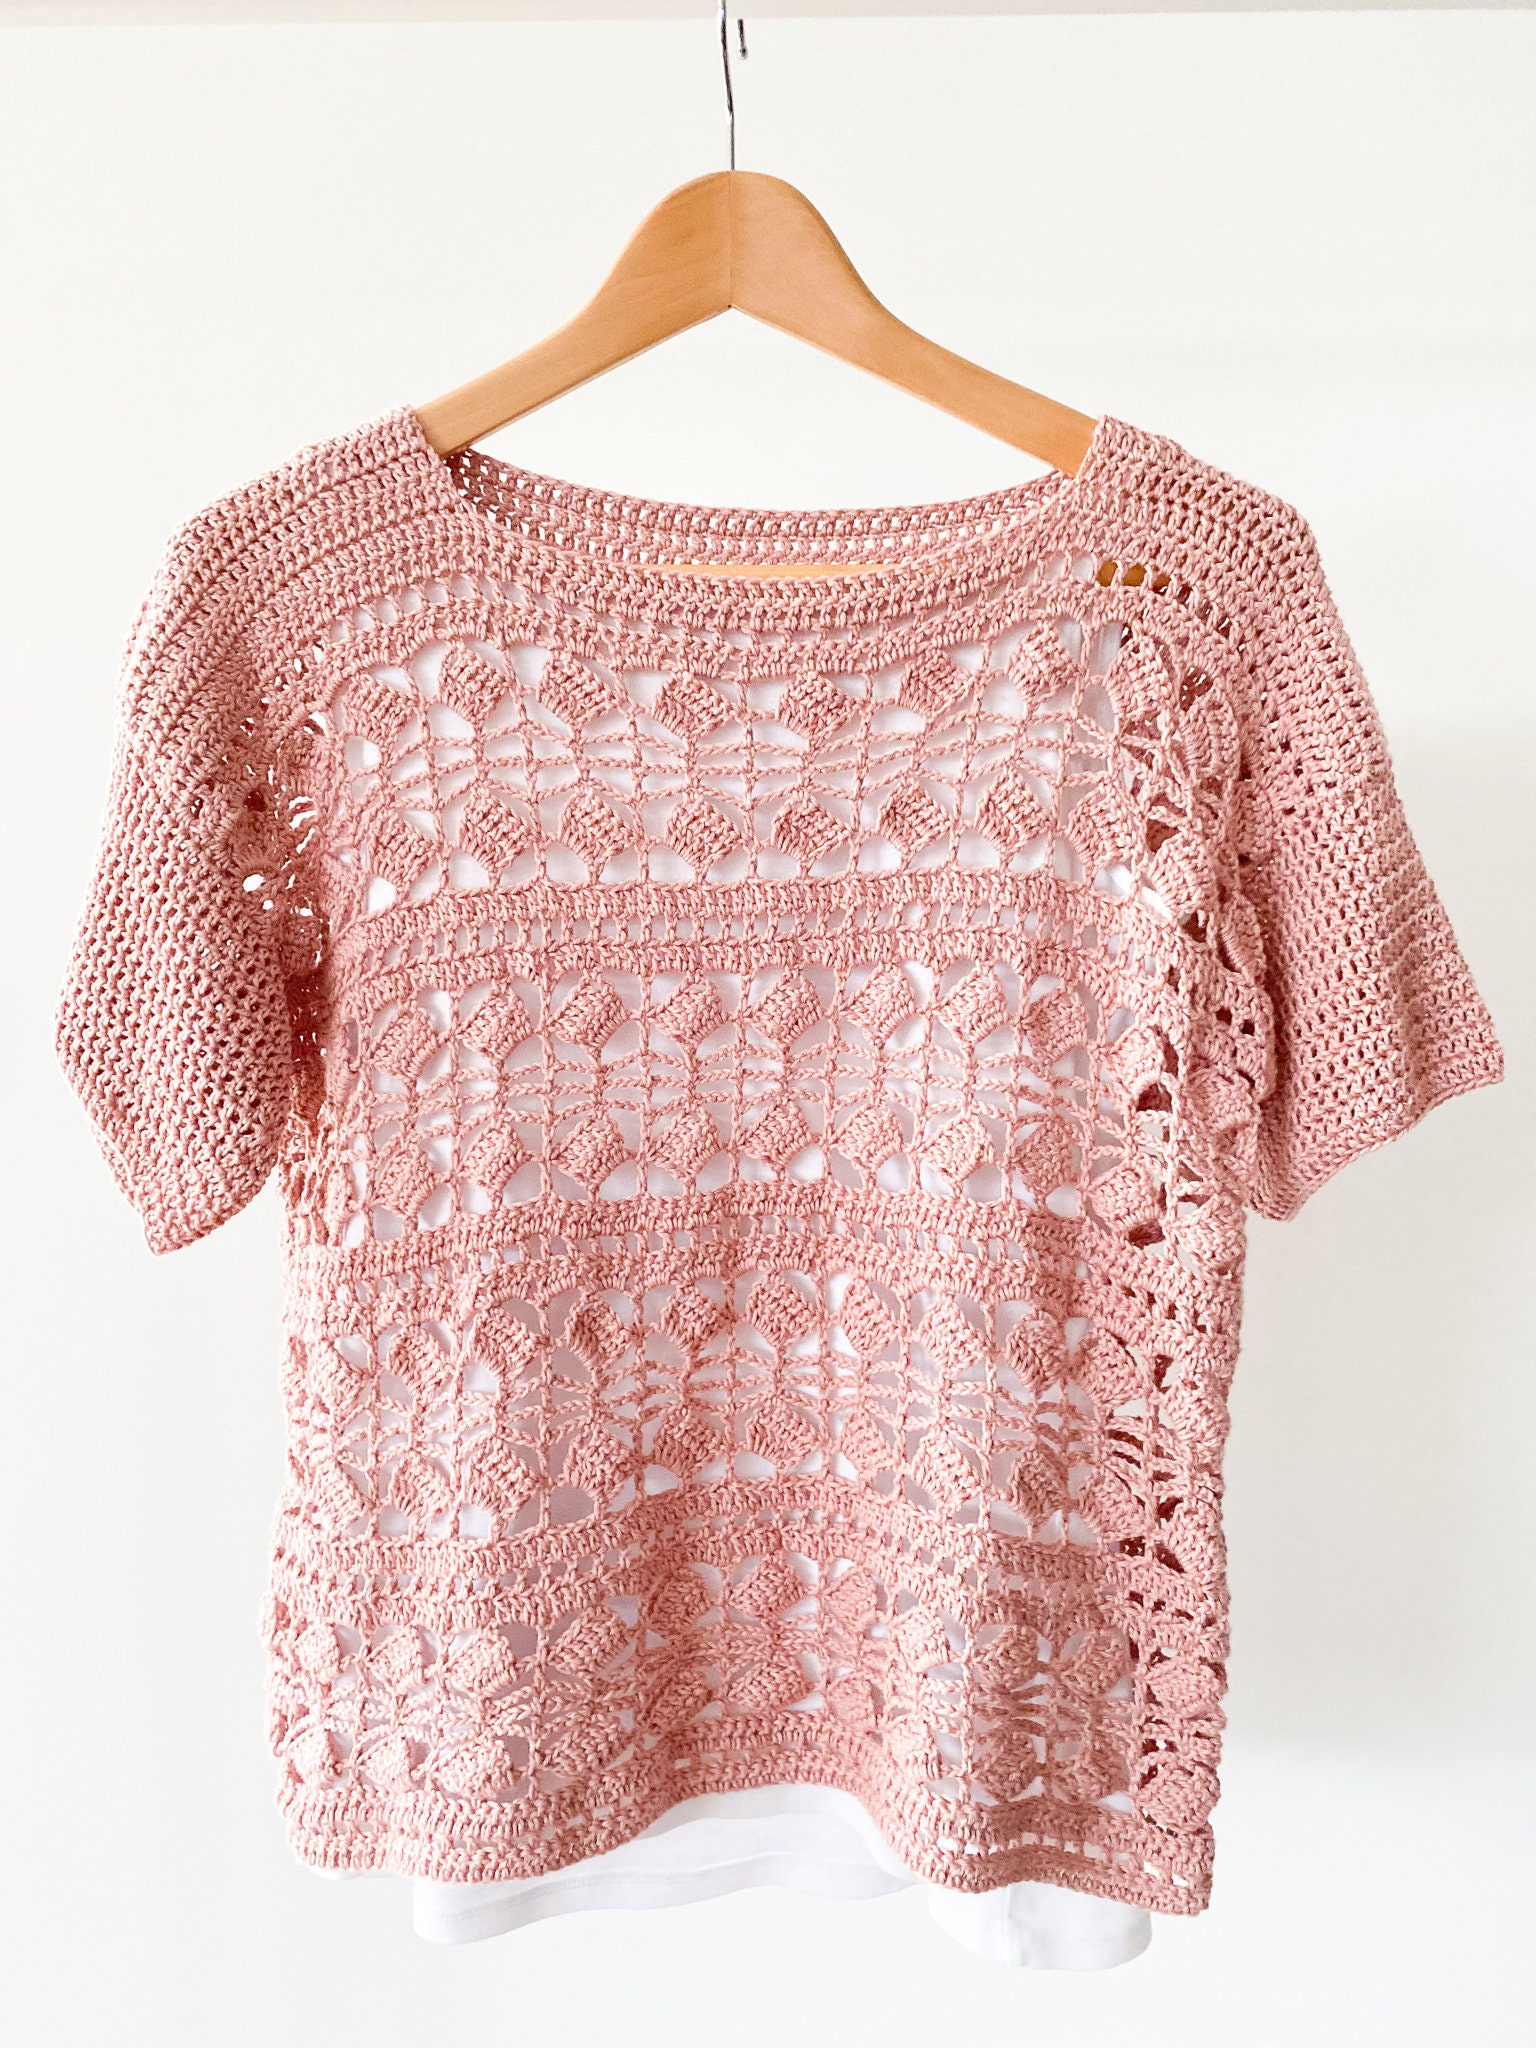 Snowdrop Lace Front Crop Top: Crochet pattern